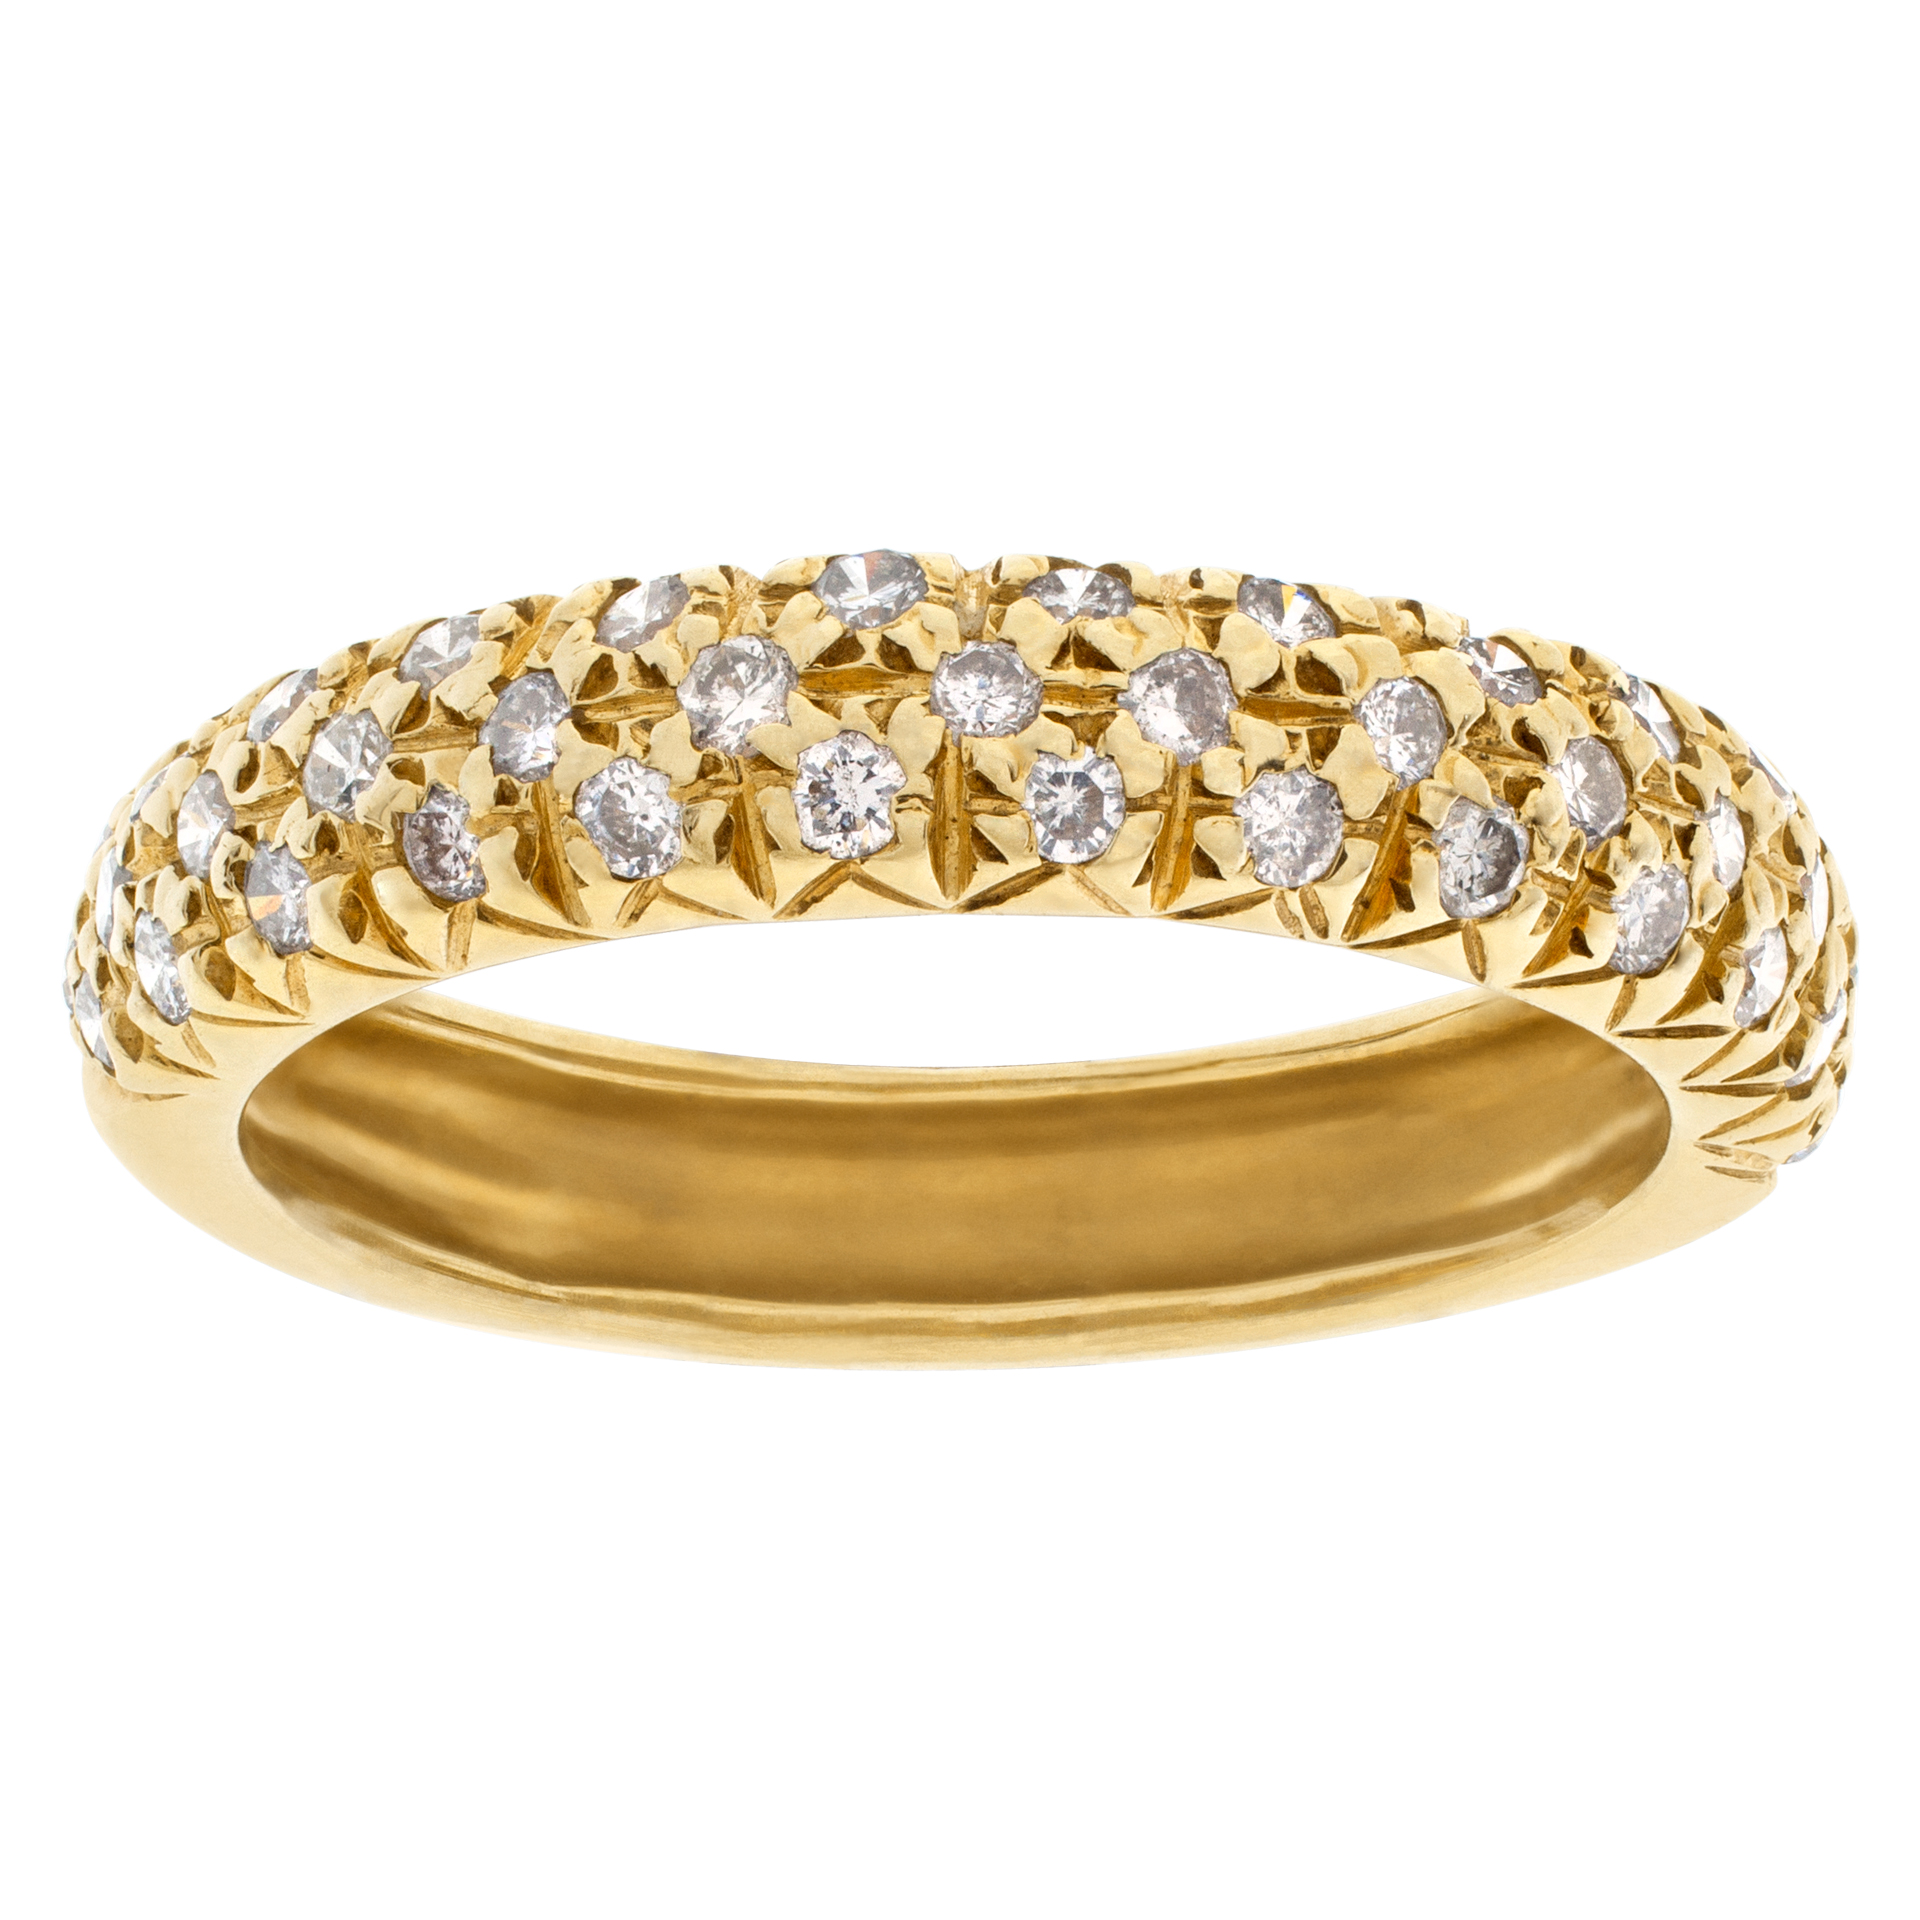 Precious pavé diamond band in 14k yellow gold. 0.80 carats in diamonds. Size 6 image 1